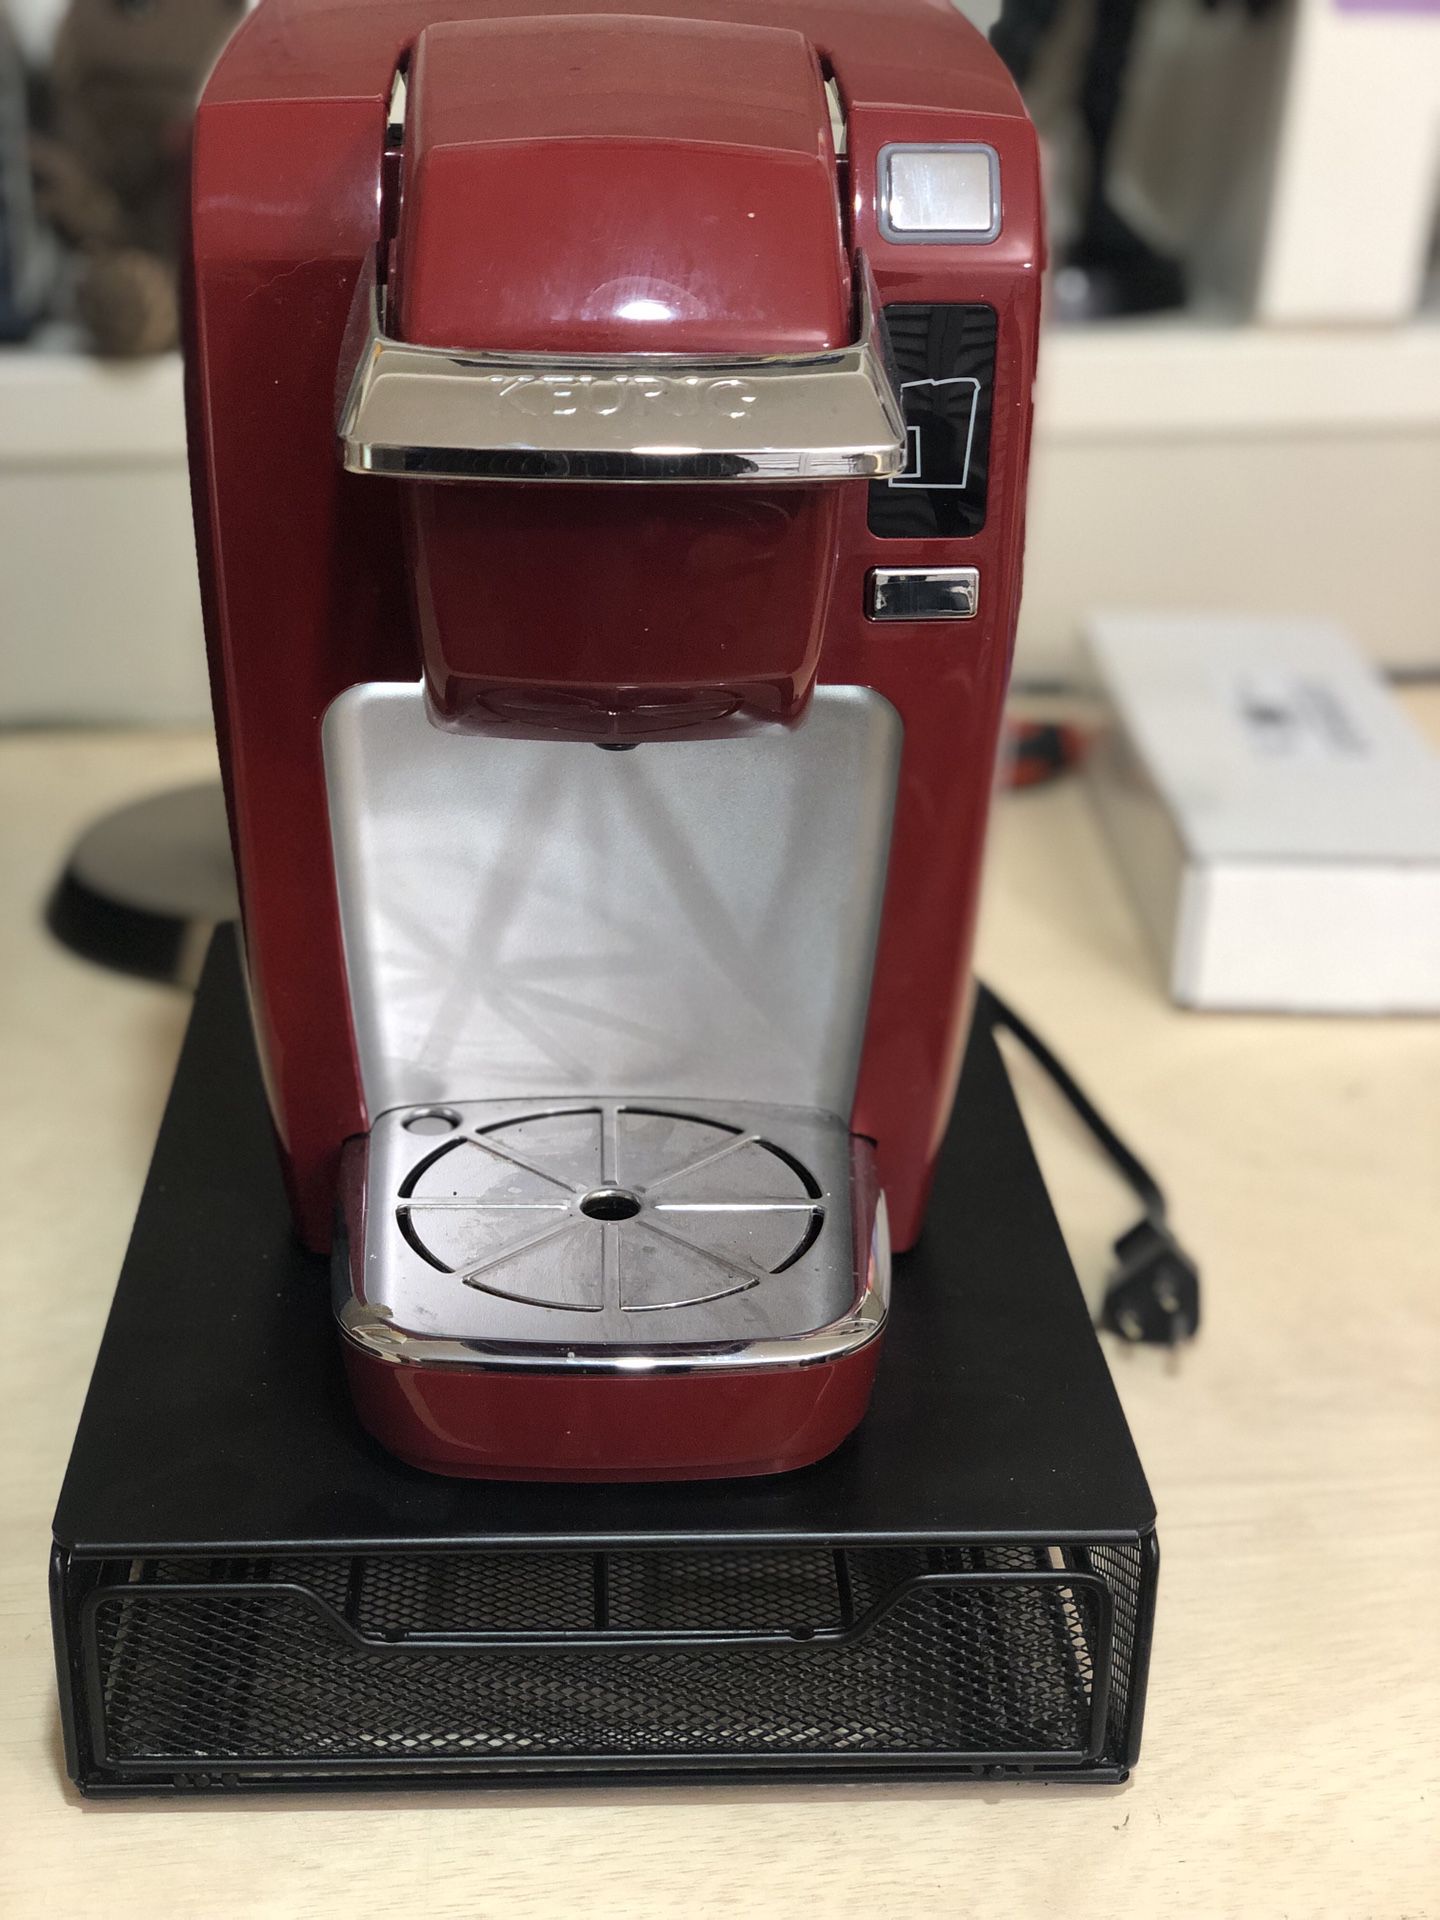 Keurig K-Mini K15 Single Serve Coffee Maker, K-cup drawer organizer included